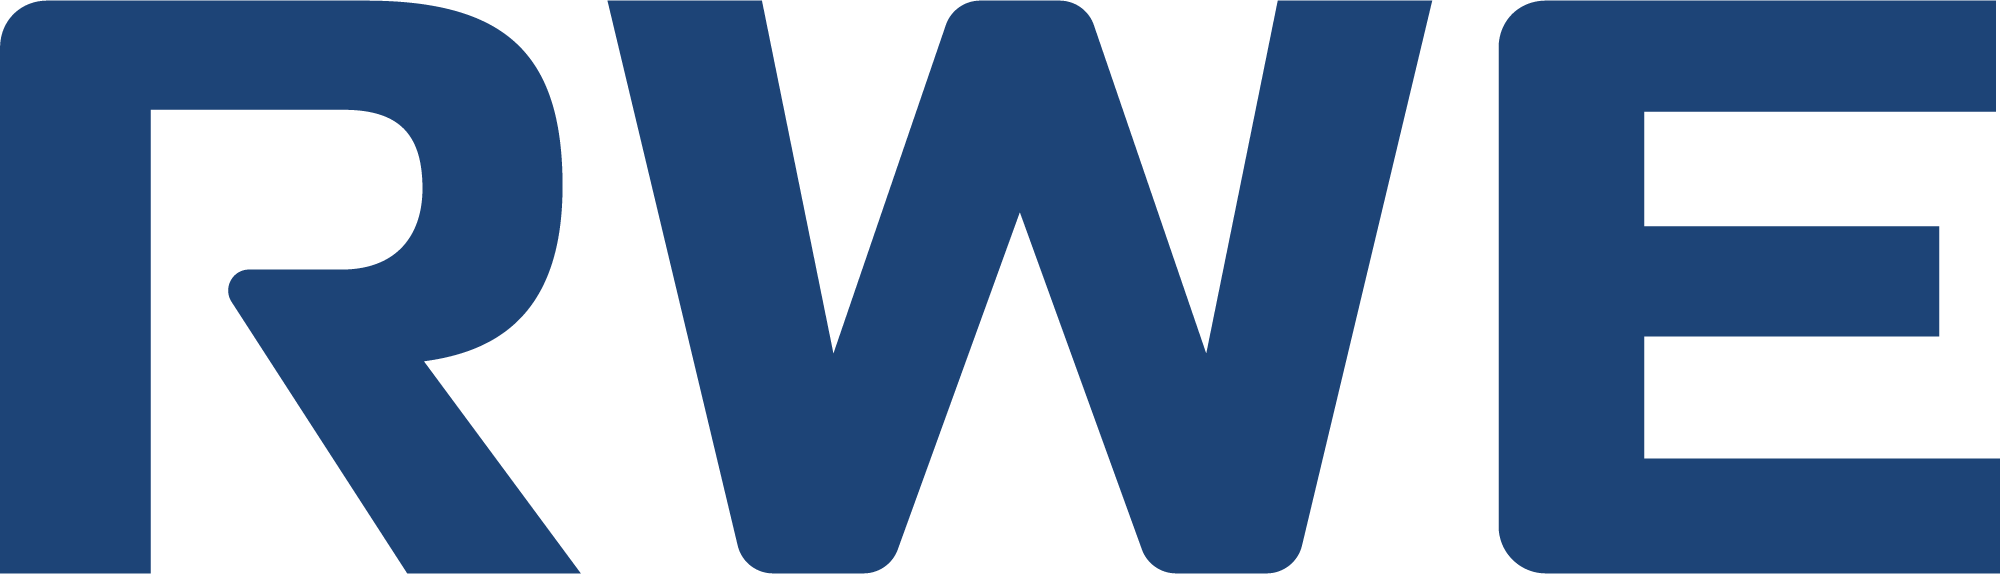 logo for RWE Supply & Trading